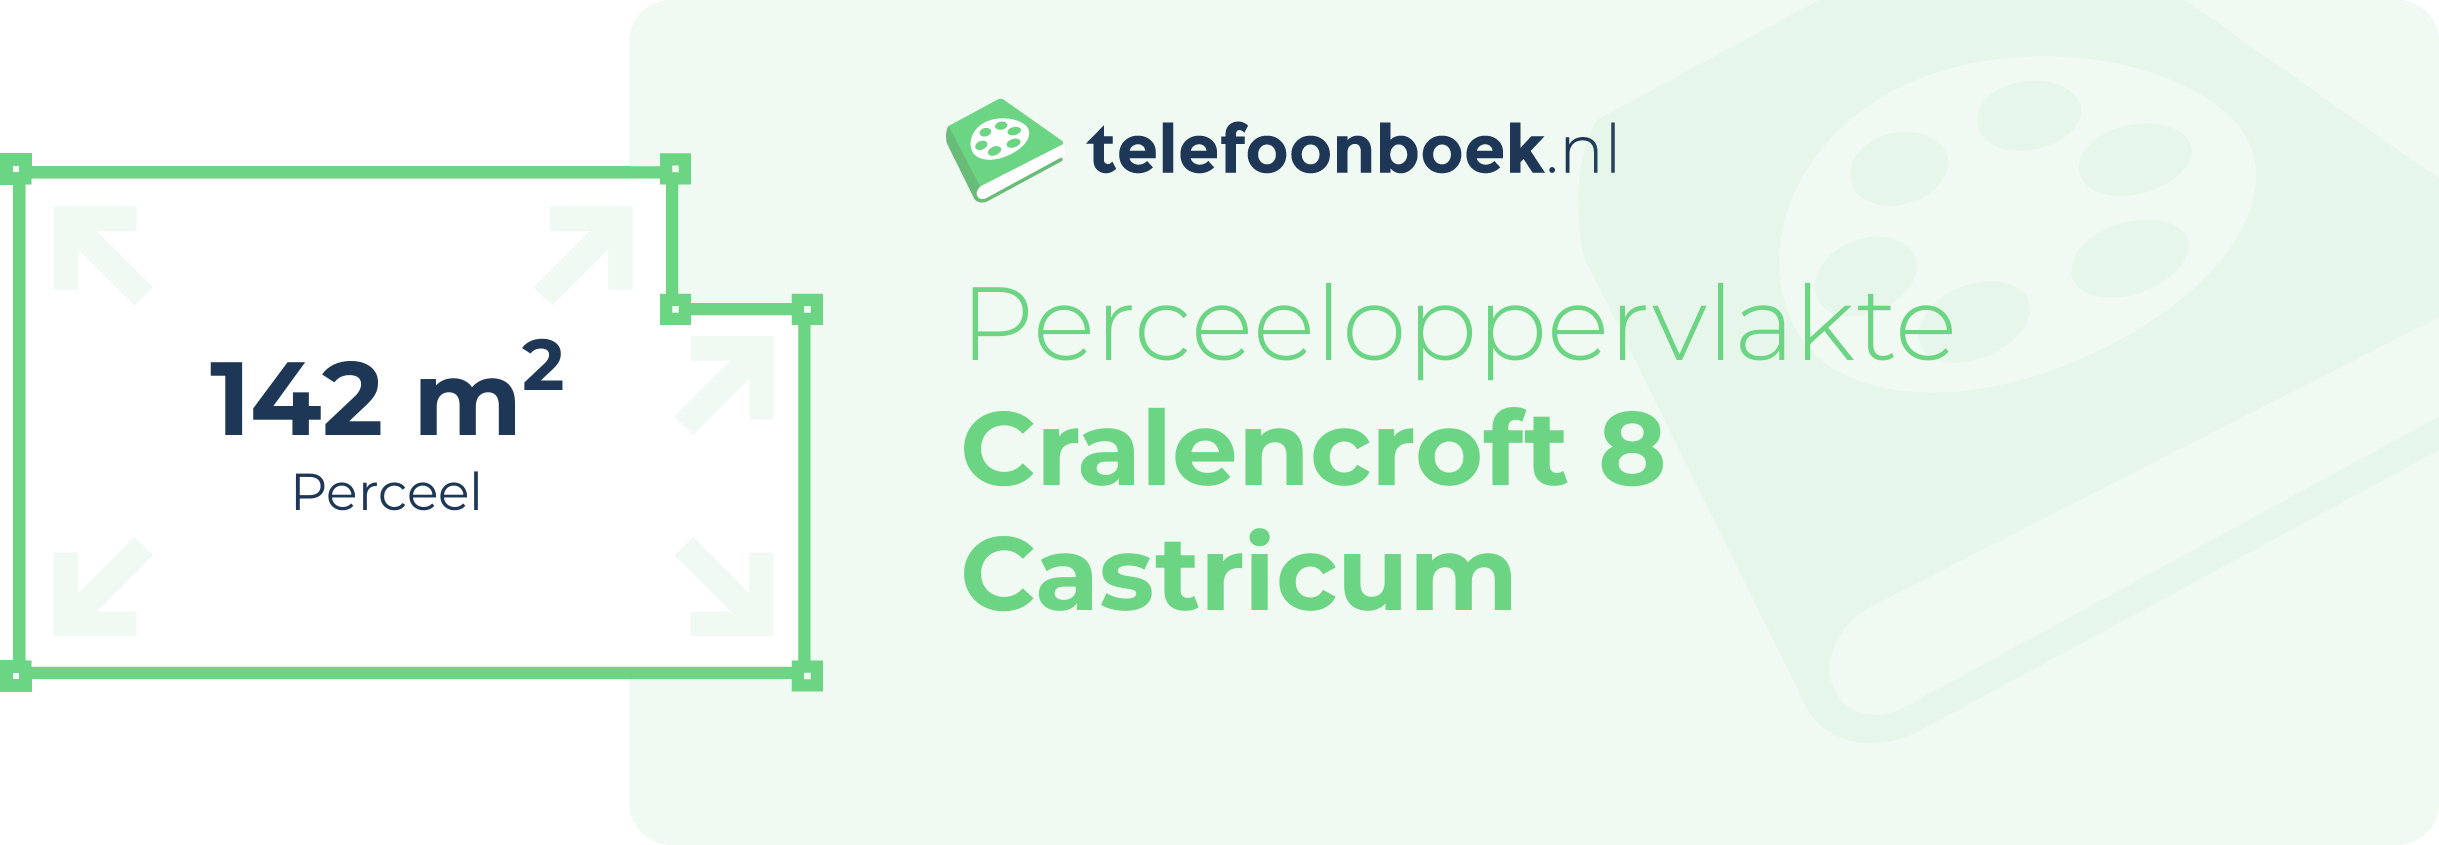 Perceeloppervlakte Cralencroft 8 Castricum